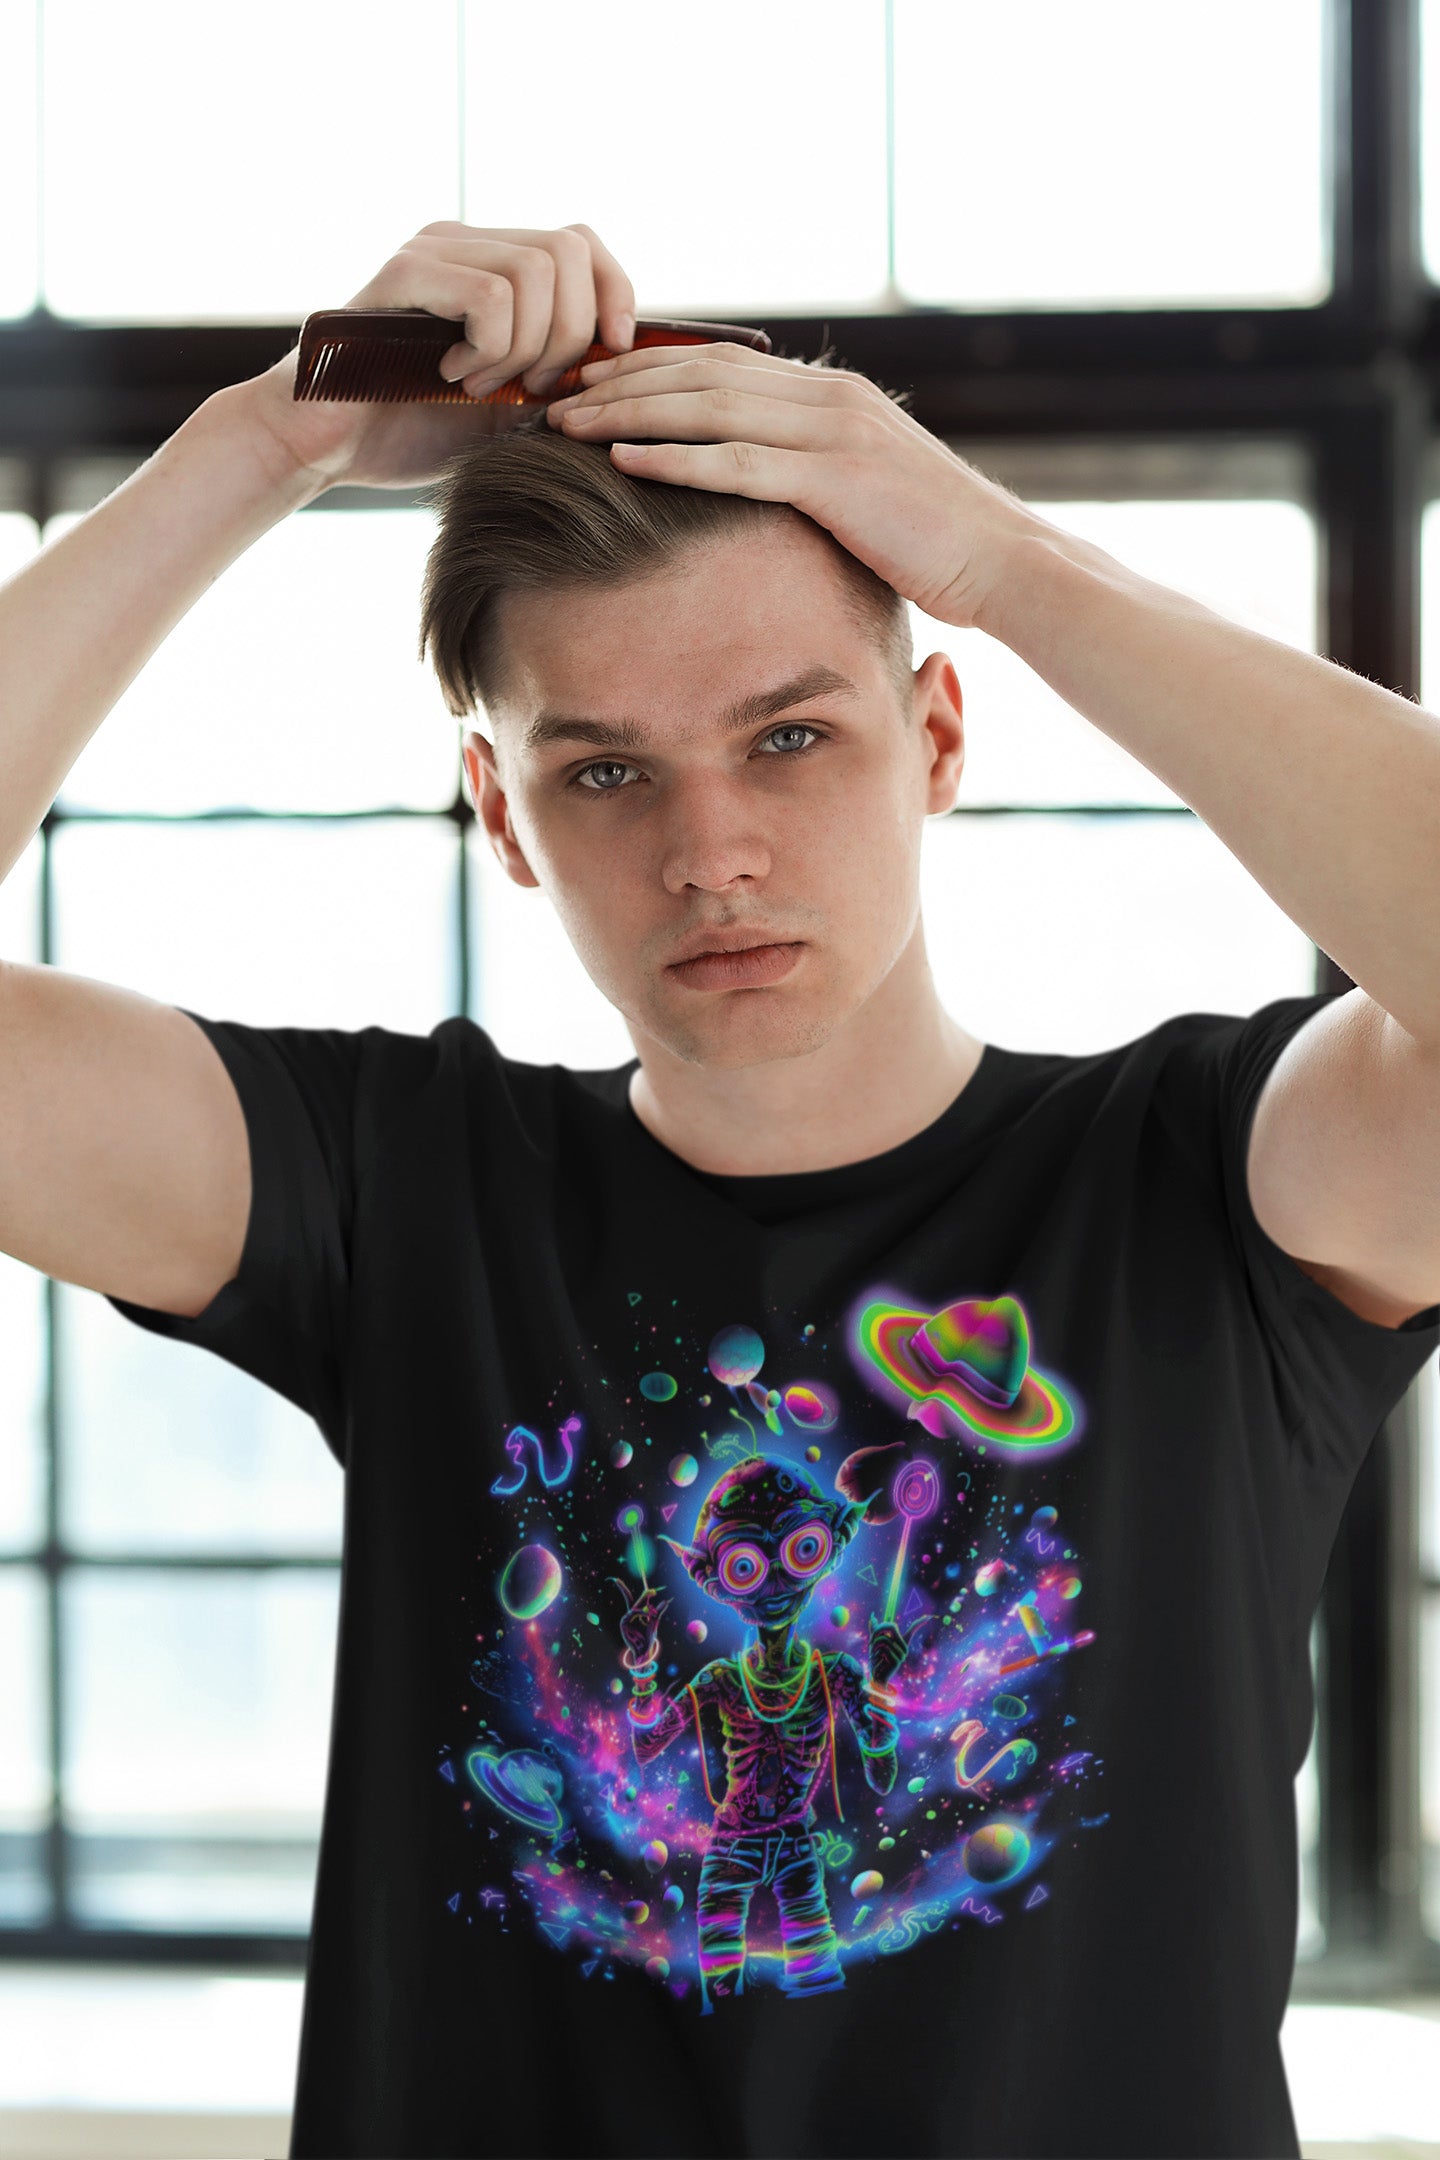 Rave Neon Trippy Techno T-Shirt